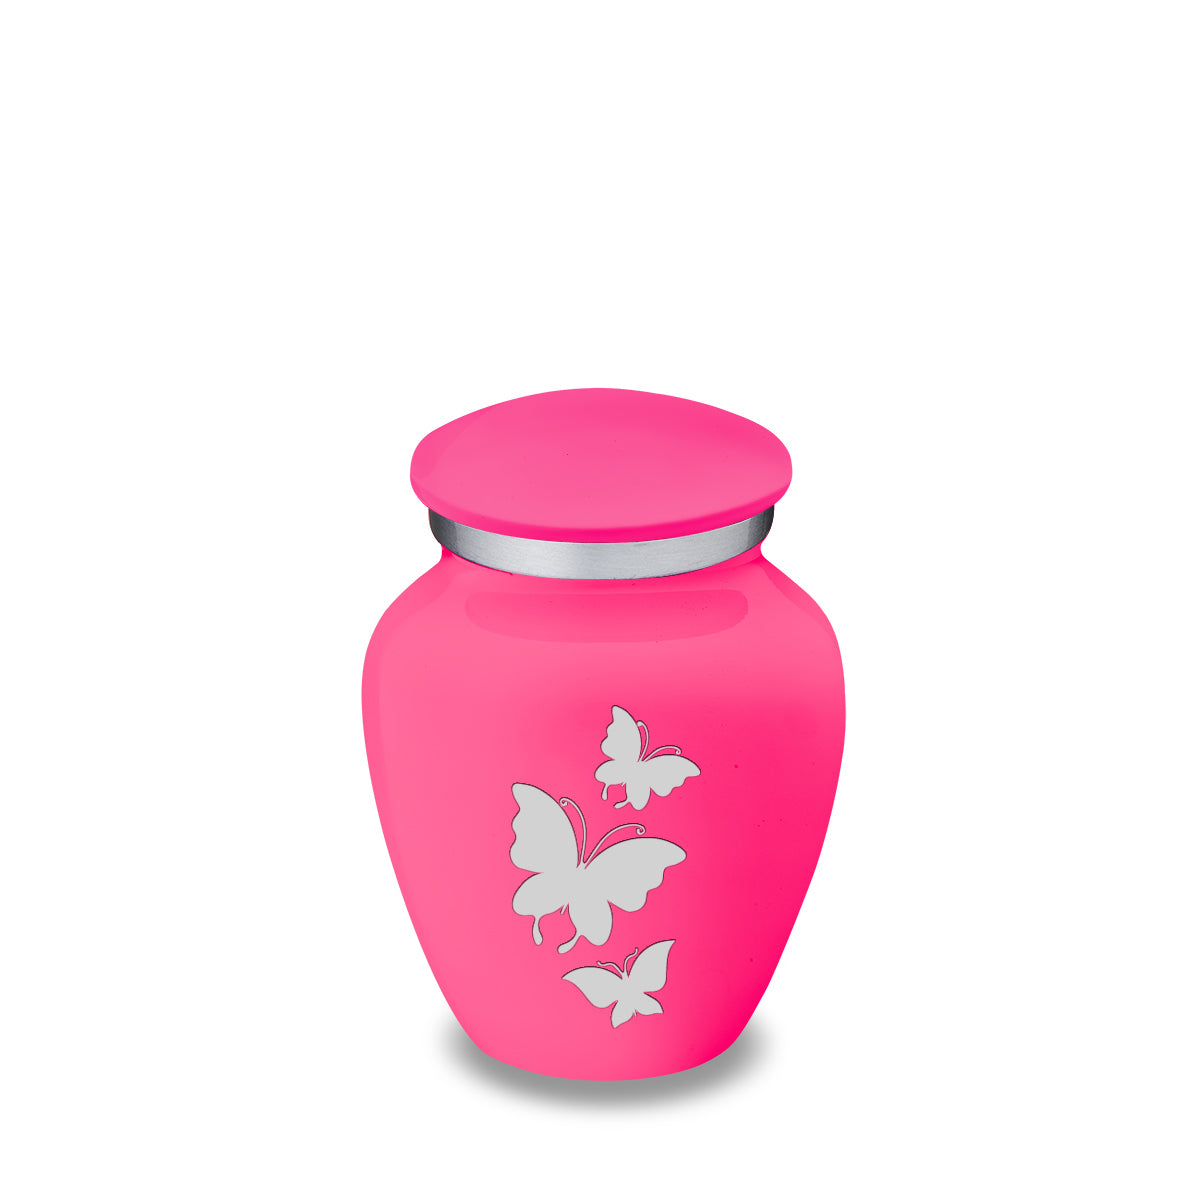 Keepsake Embrace Bright Pink Butterflies Cremation Urn